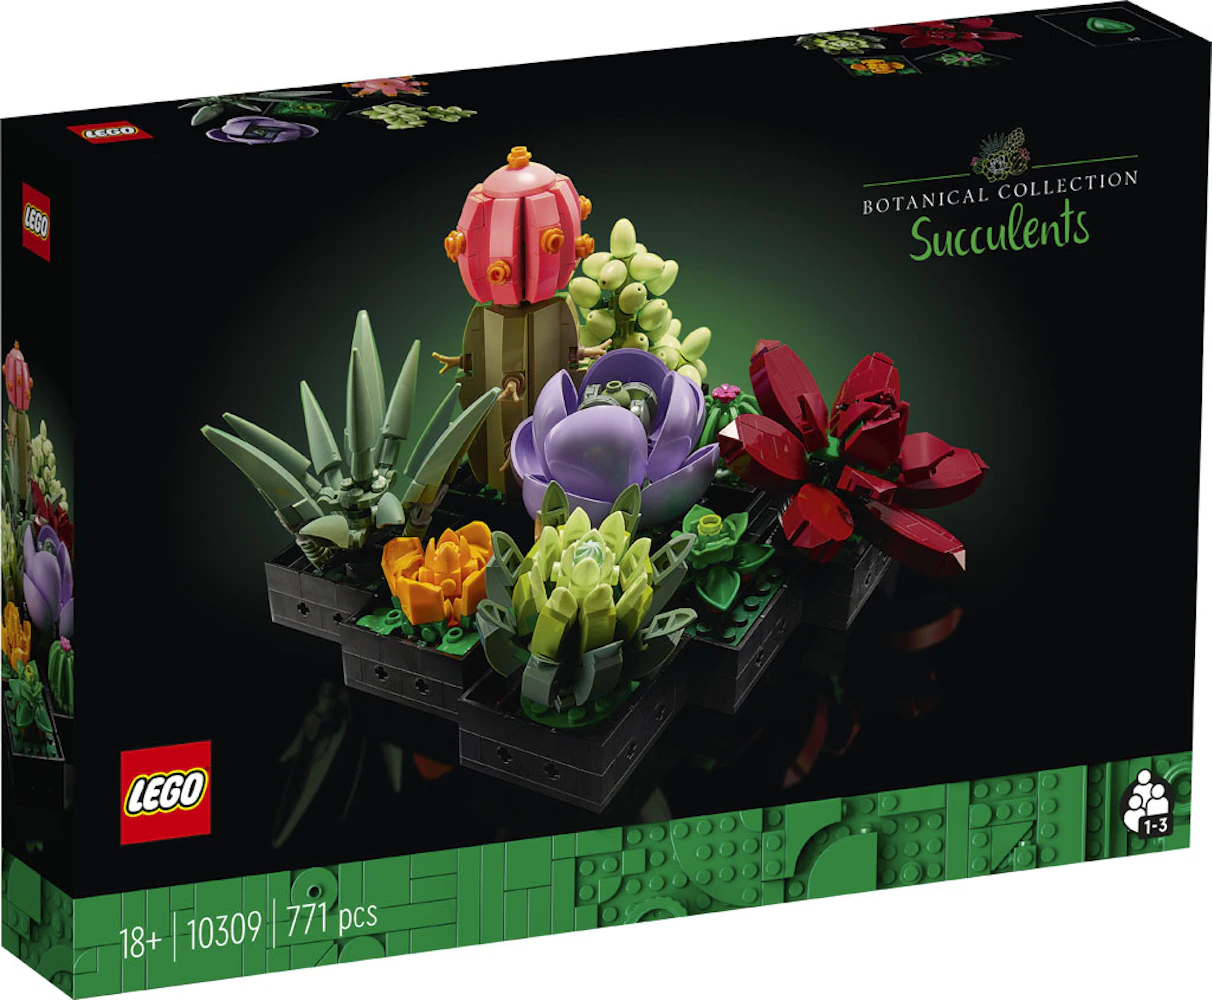 https://images.stockx.com/images/LEGO-Botanical-Collection-Succulents-Set-10309.jpg?fit=fill&bg=FFFFFF&w=700&h=500&fm=webp&auto=compress&q=90&dpr=2&trim=color&updated_at=1649952885